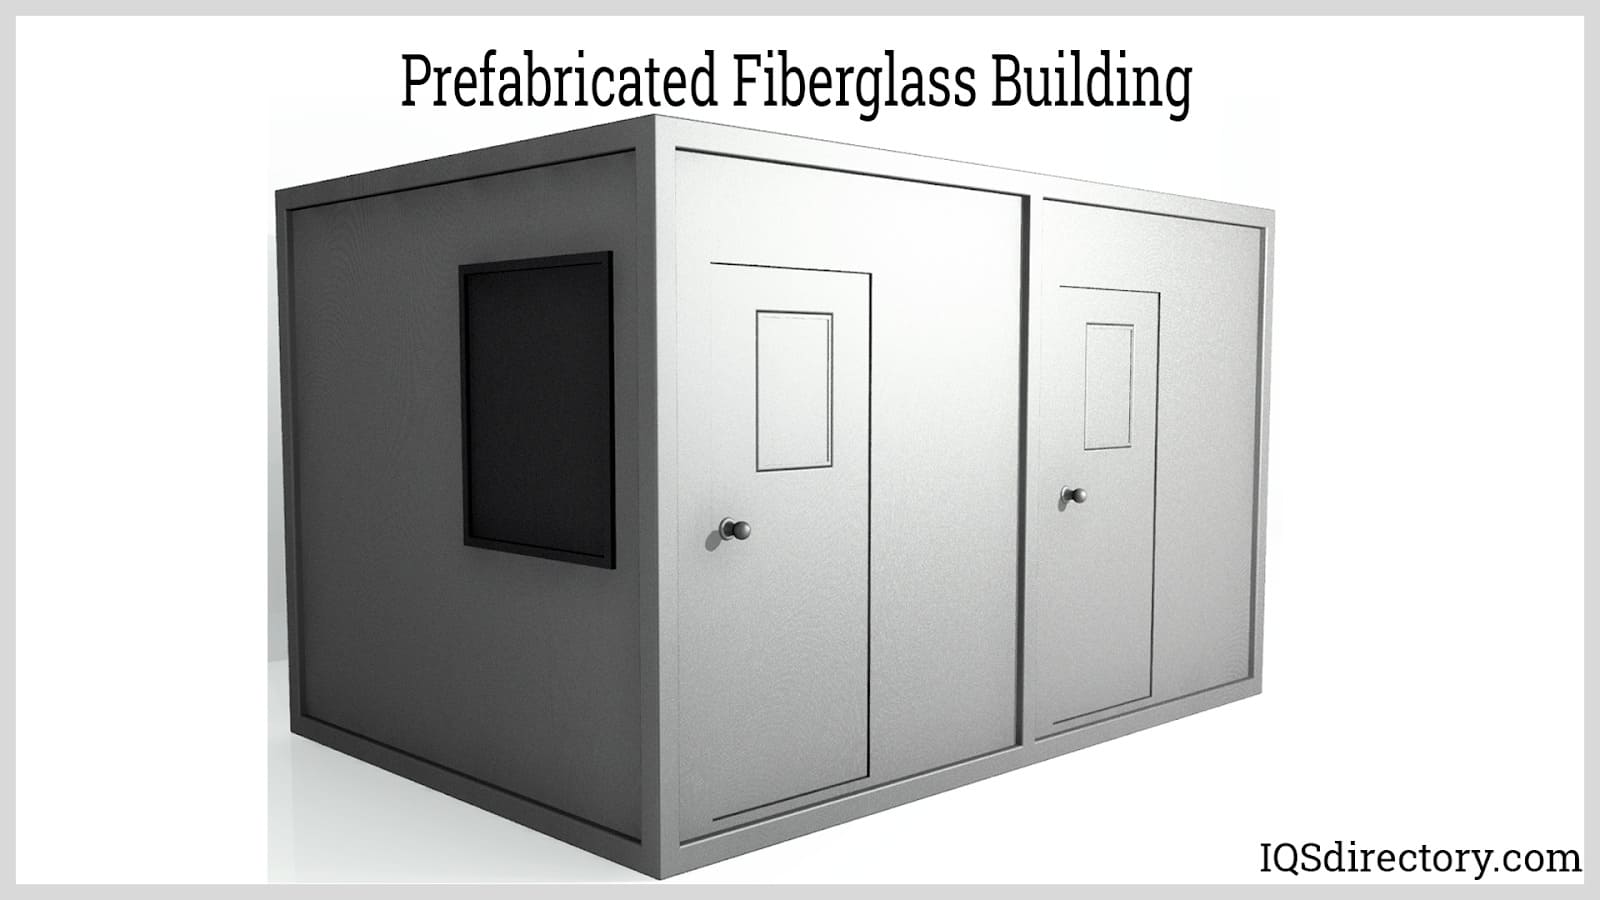 Prefabricated Fiberglass Building